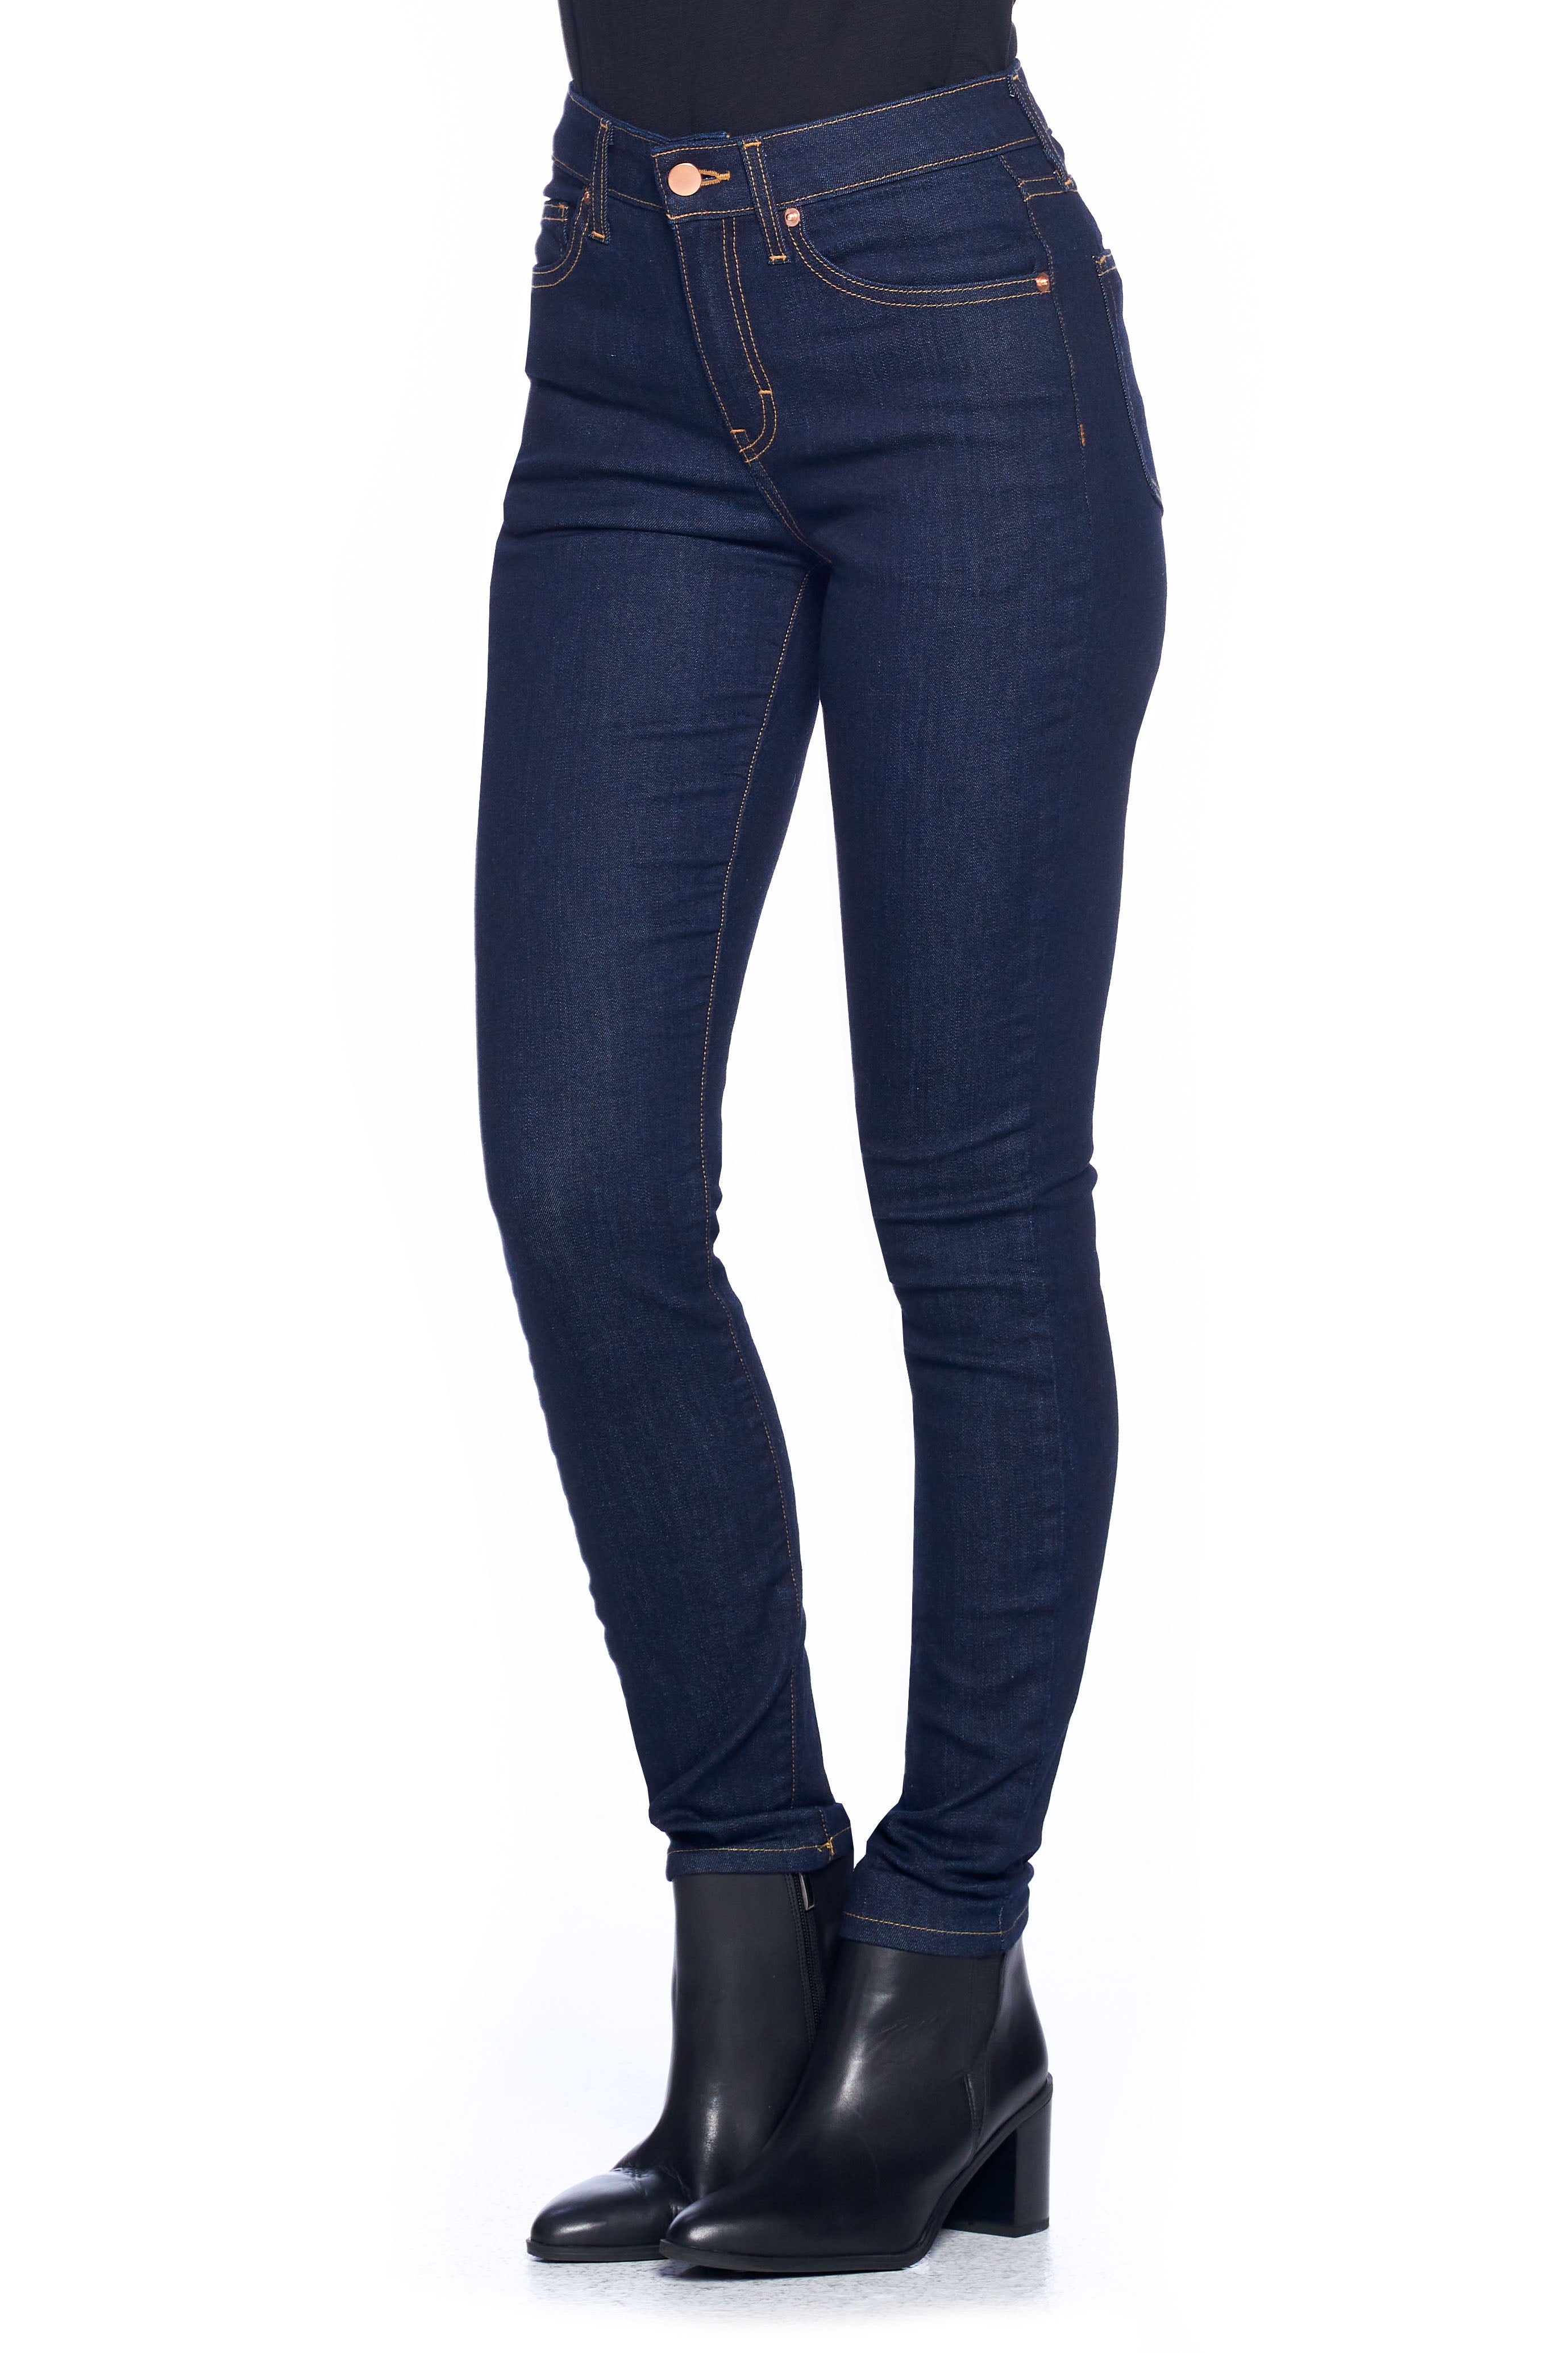 Women's Comfort Skinny Fit Jeans | Dark Indigo | Made in the USA - Aviator